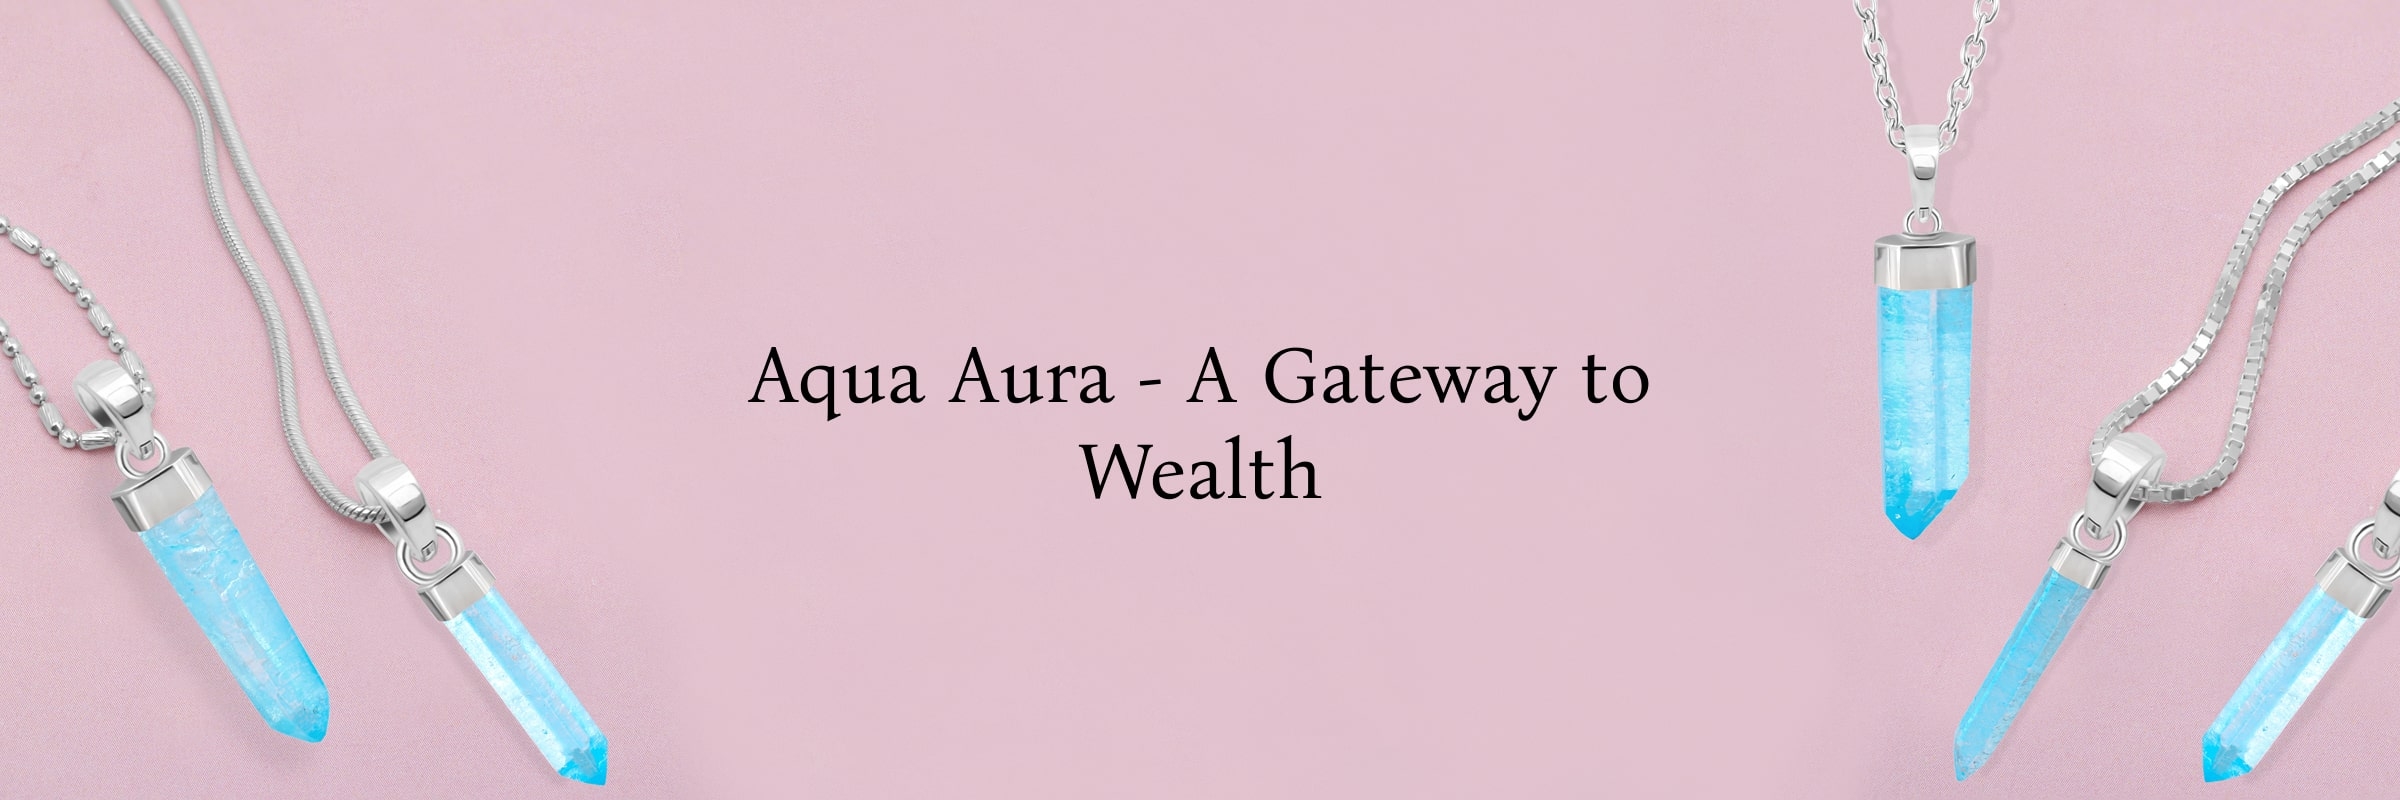 Aqua Aura and Wealth